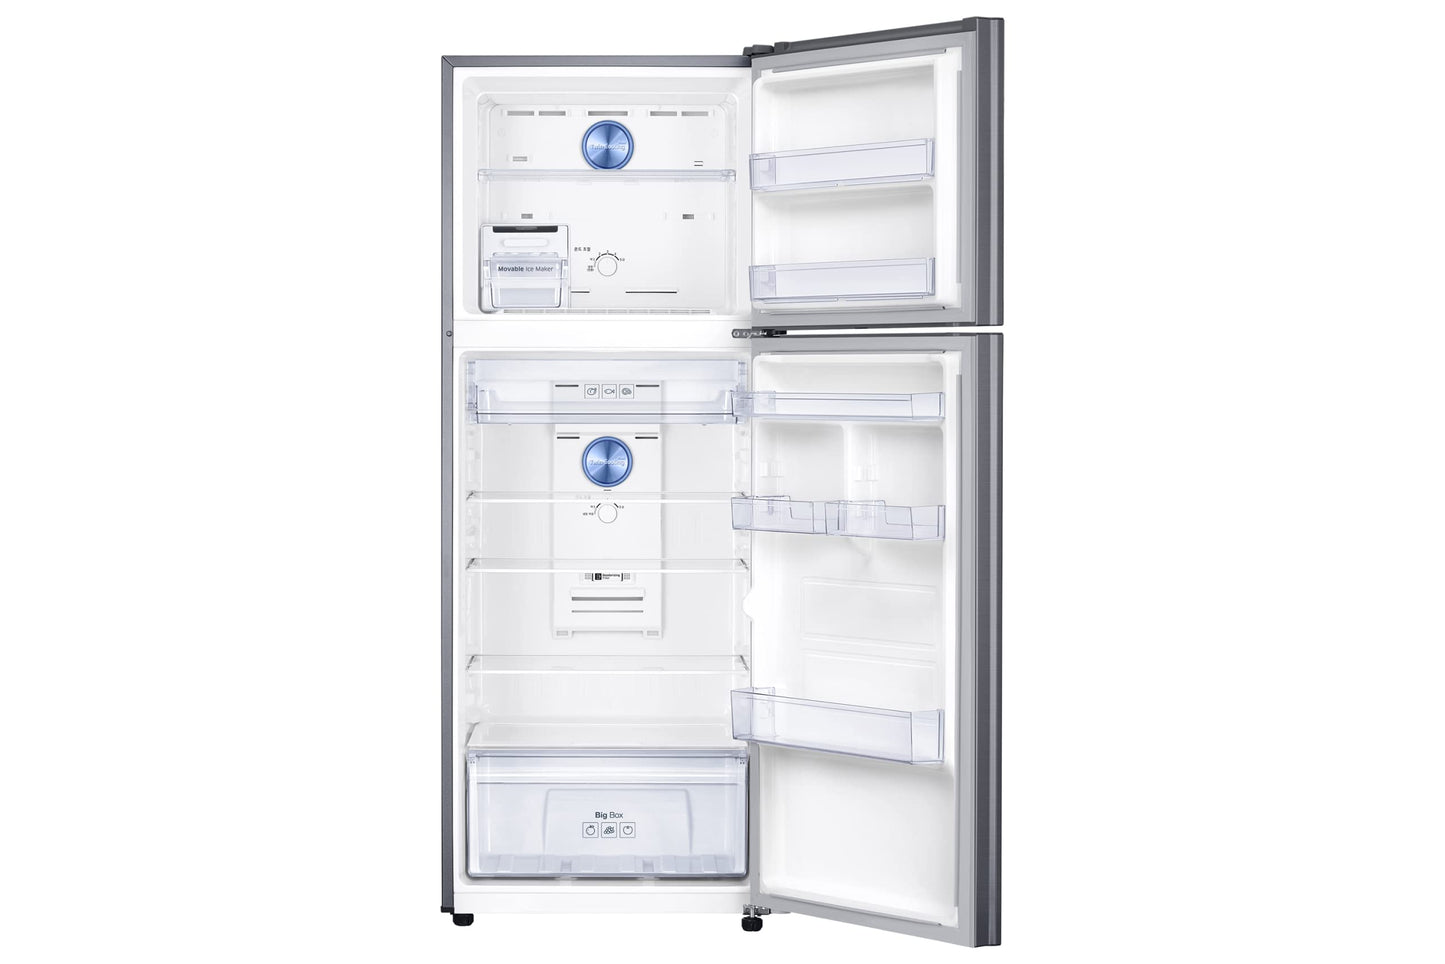 Samsung Tmf Refrigerator, Twin Cooling PlUS, Tempered Glass Shelves, Dit Silver Finish, 384 Litres, 20 Year Warranty on Digital Inverter Compressor